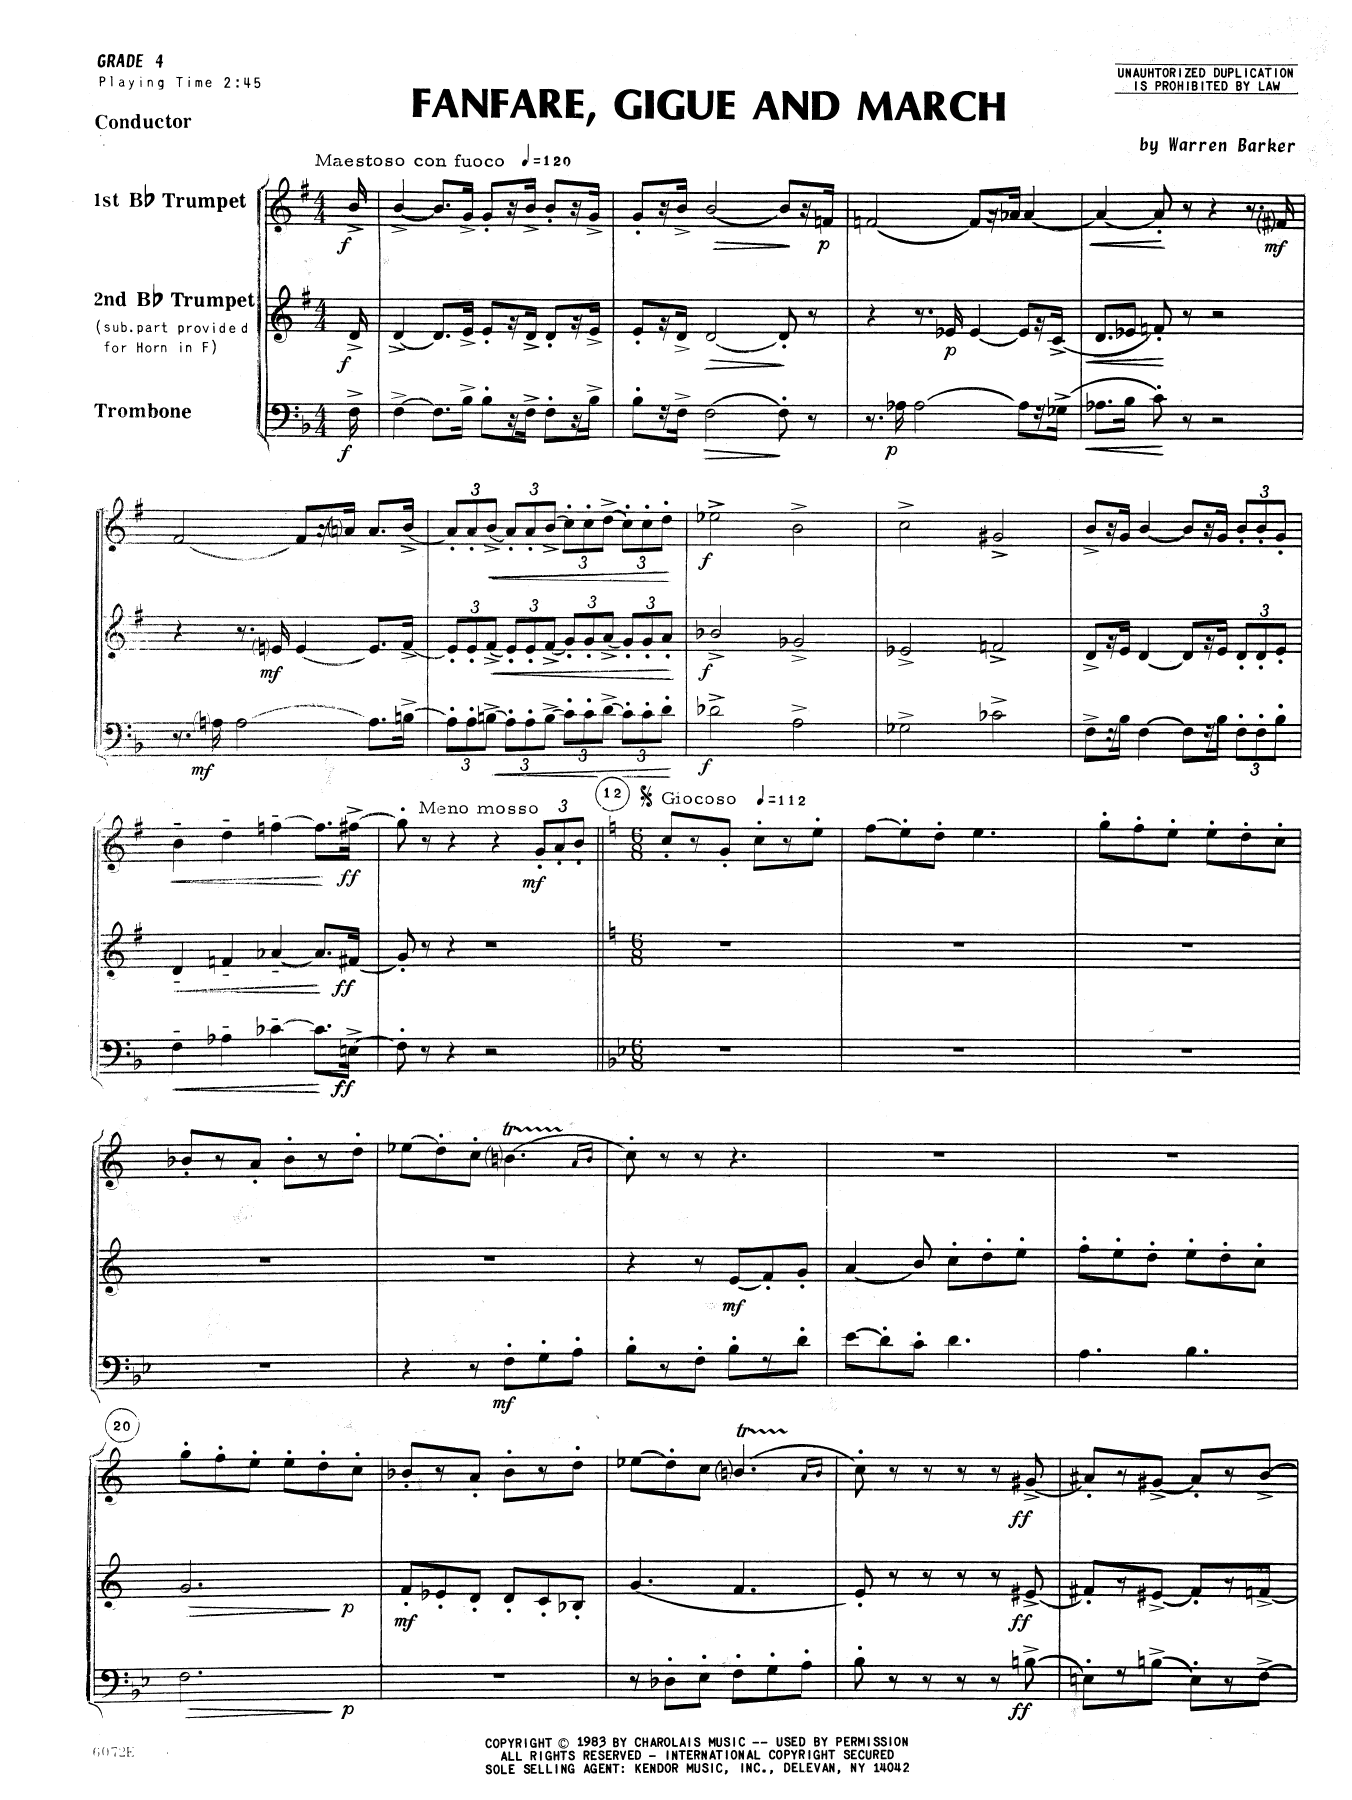 Fanfare, Gigue And March - Full Score (Brass Ensemble) von Barker